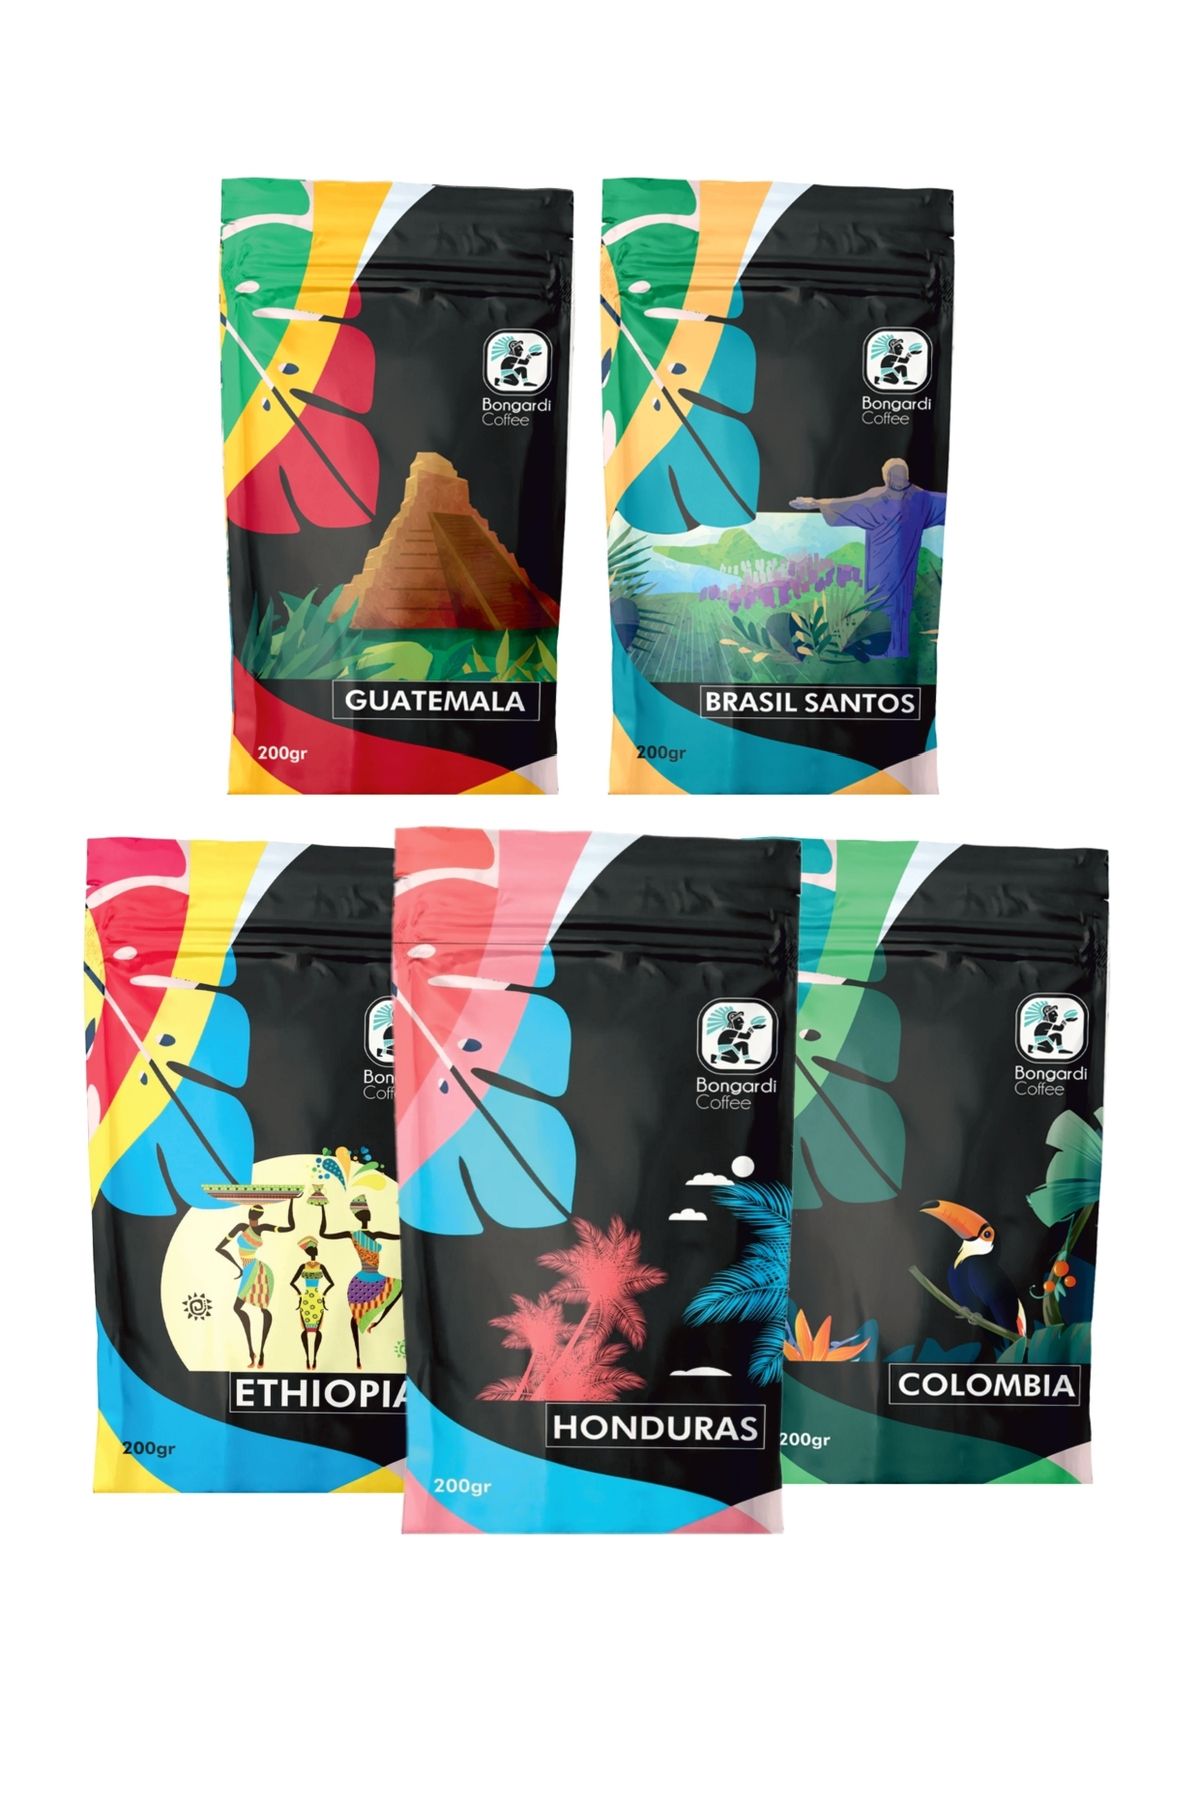 Bongardi Coffee 5x200 gram Yöresel Brezilya Etiyopya Colombia Guatemala Honduras Filtre Ve Espresso Seti